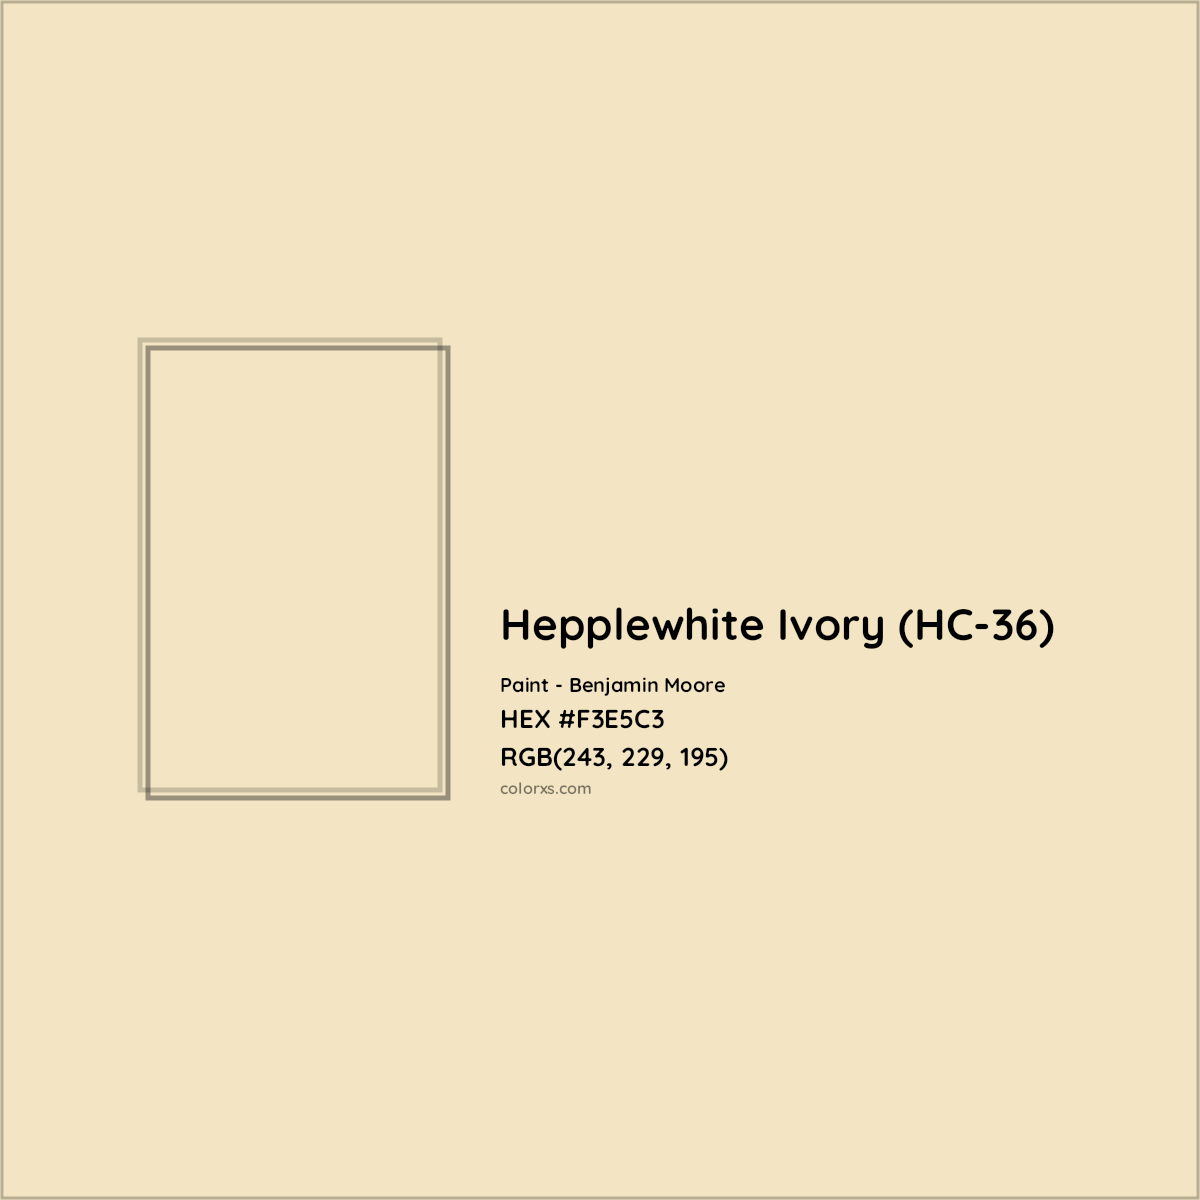 HEX #F3E5C3 Hepplewhite Ivory (HC-36) Paint Benjamin Moore - Color Code